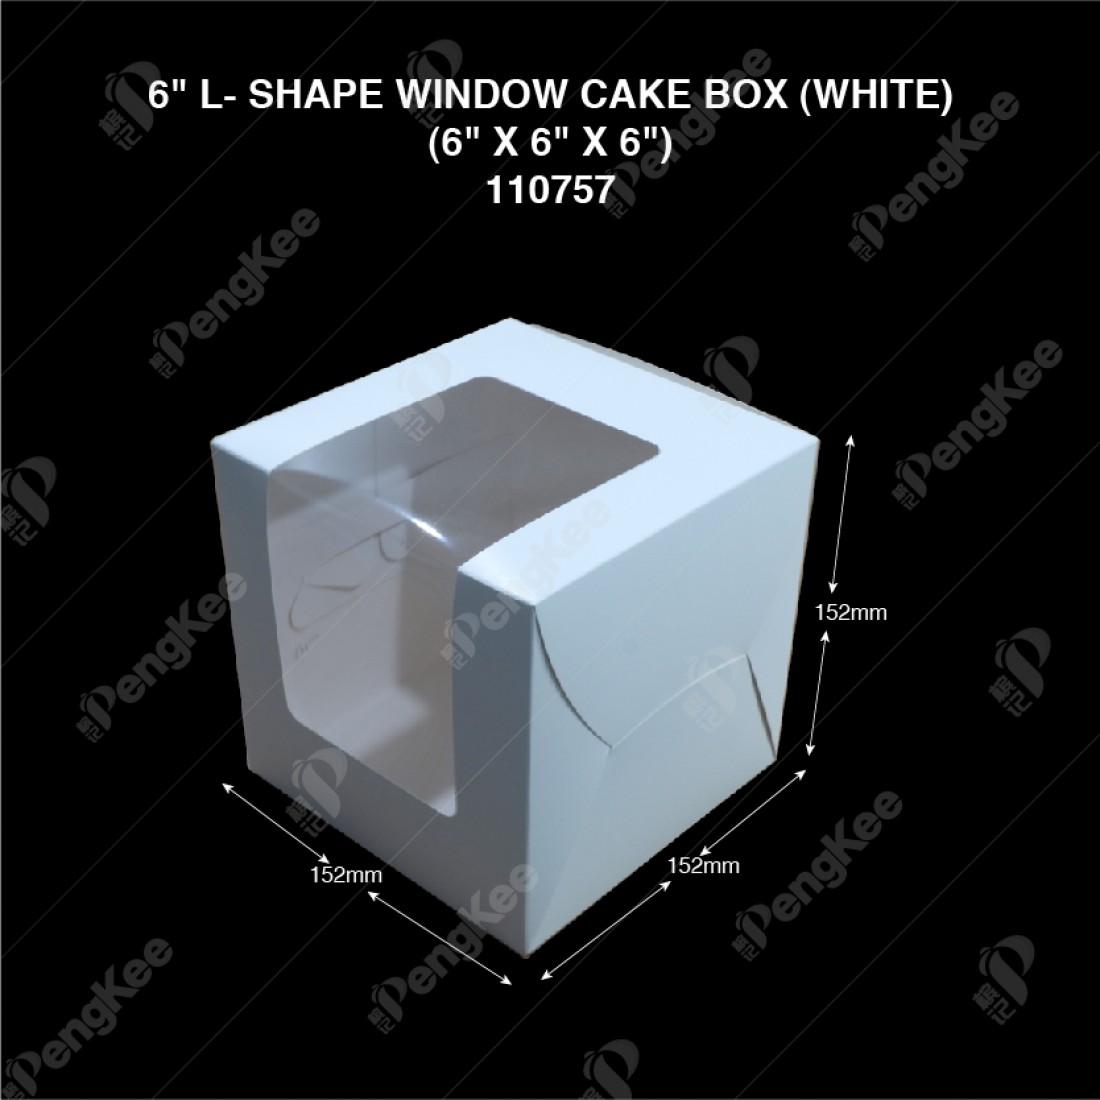 6" L- SHAPE WINDOW CAKE BOX (WHITE) (6"*6"*6") 